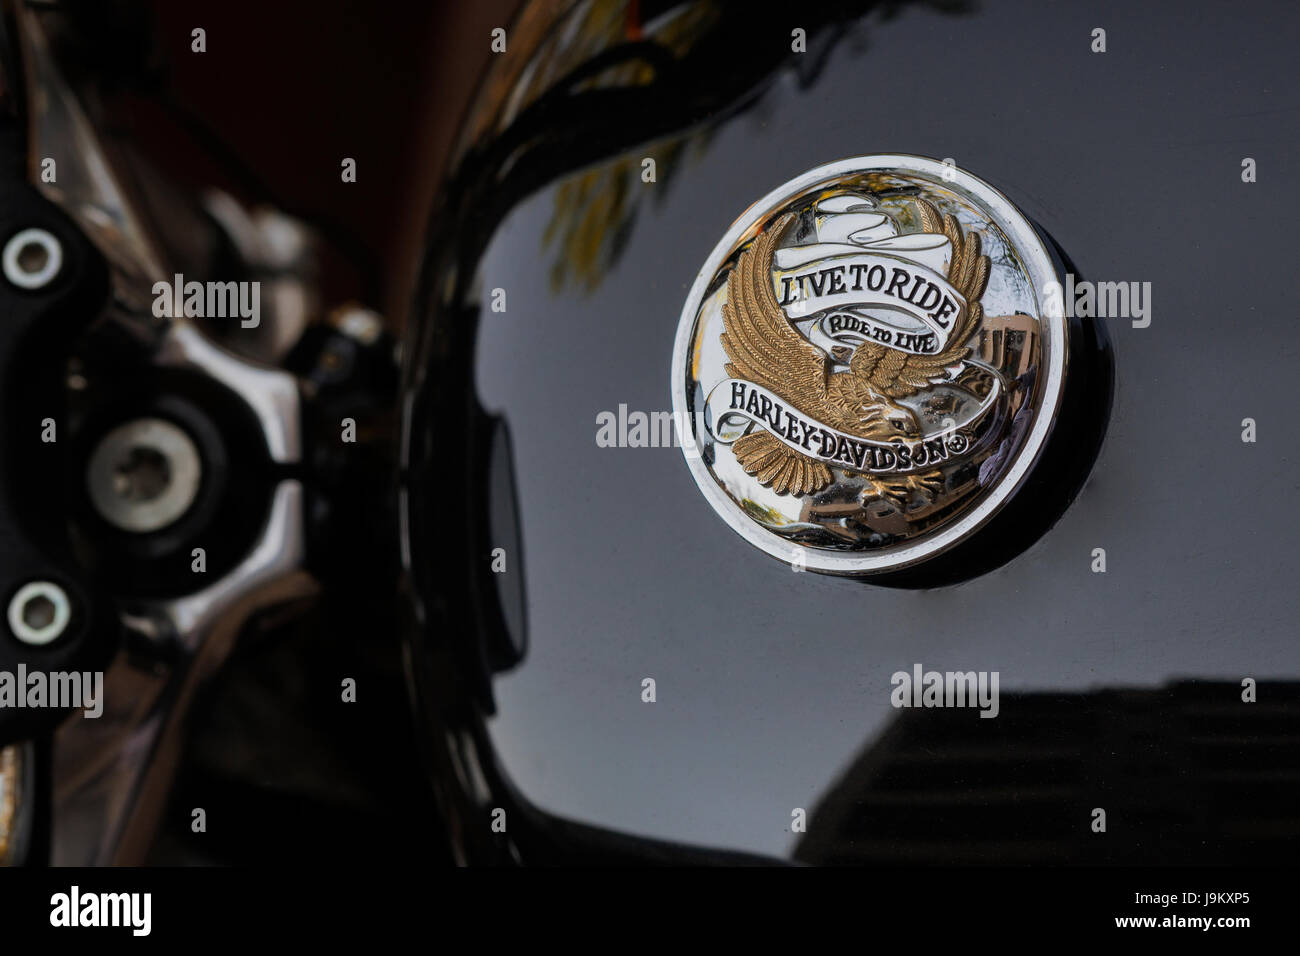 Harley Davidson motorcycle Logo on fuel tank cap, India, Asia Stock Photo